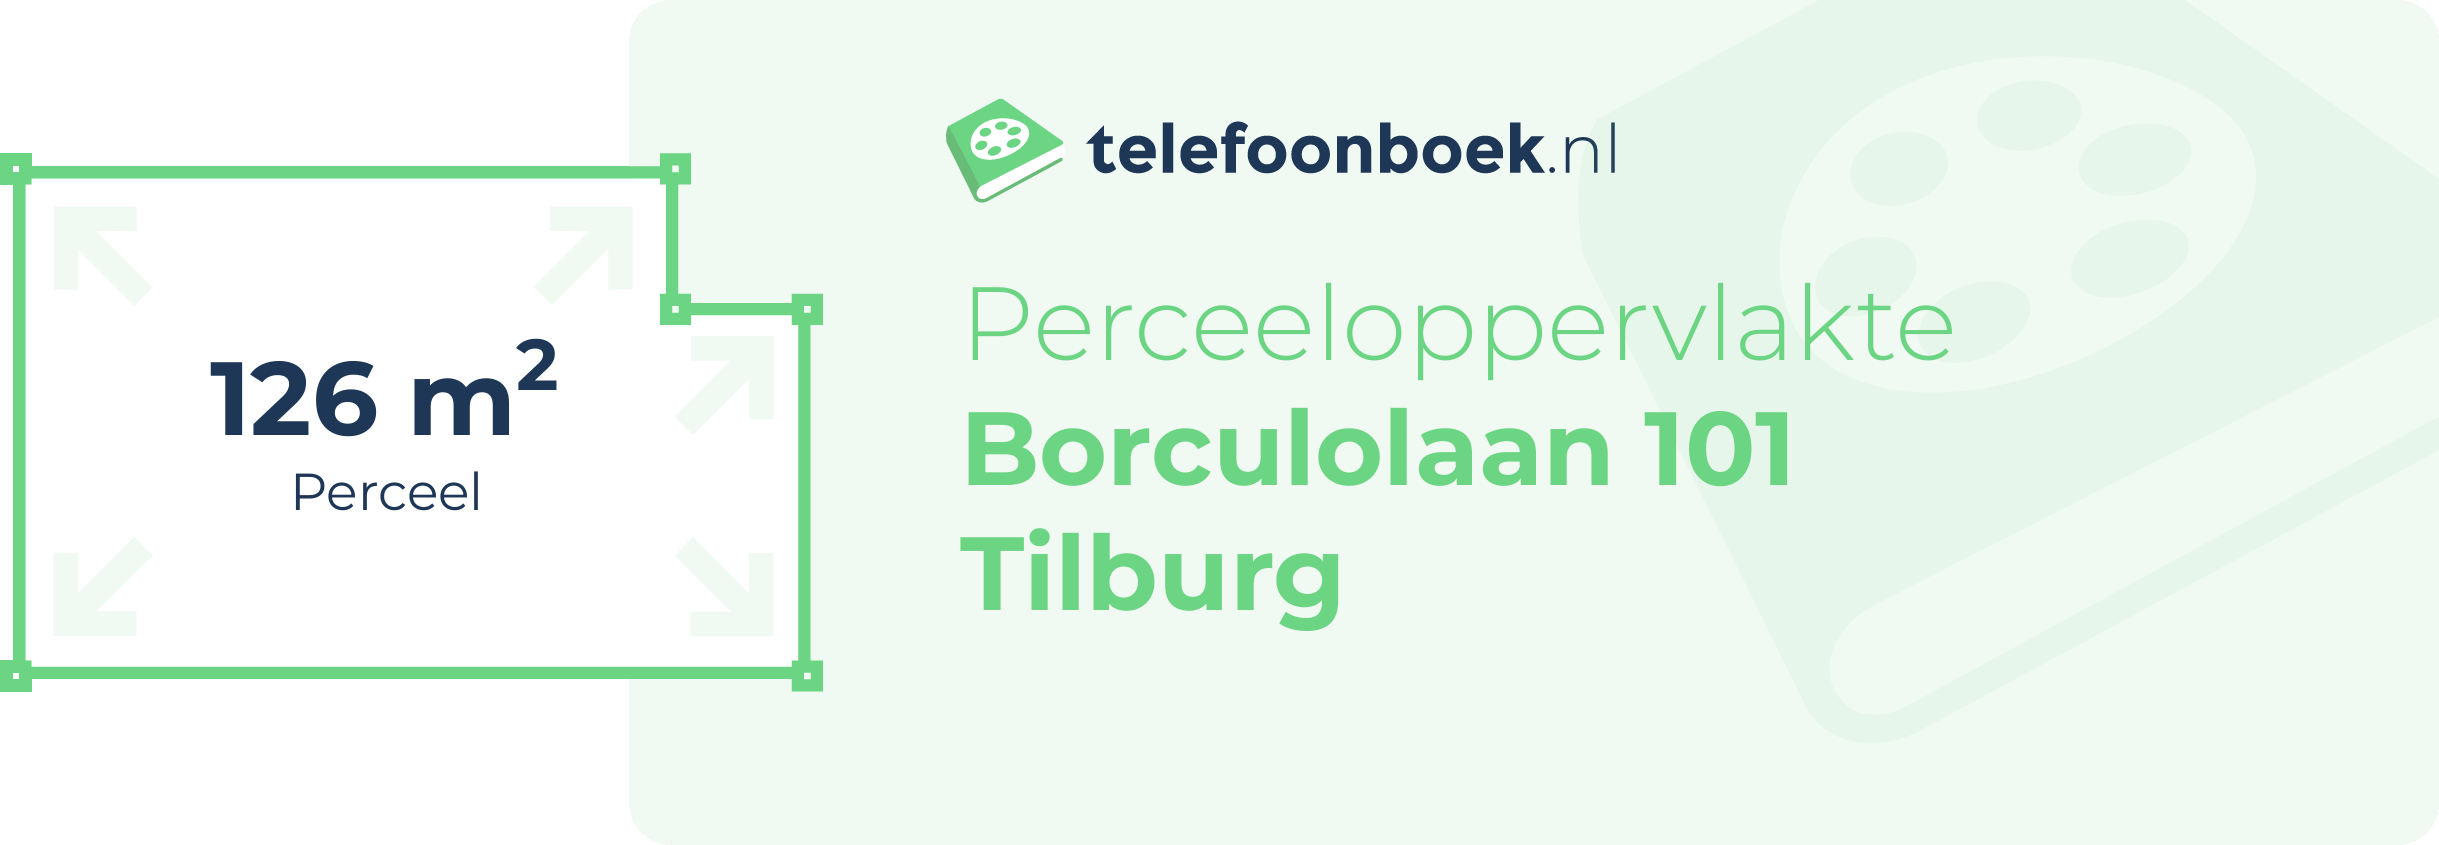 Perceeloppervlakte Borculolaan 101 Tilburg